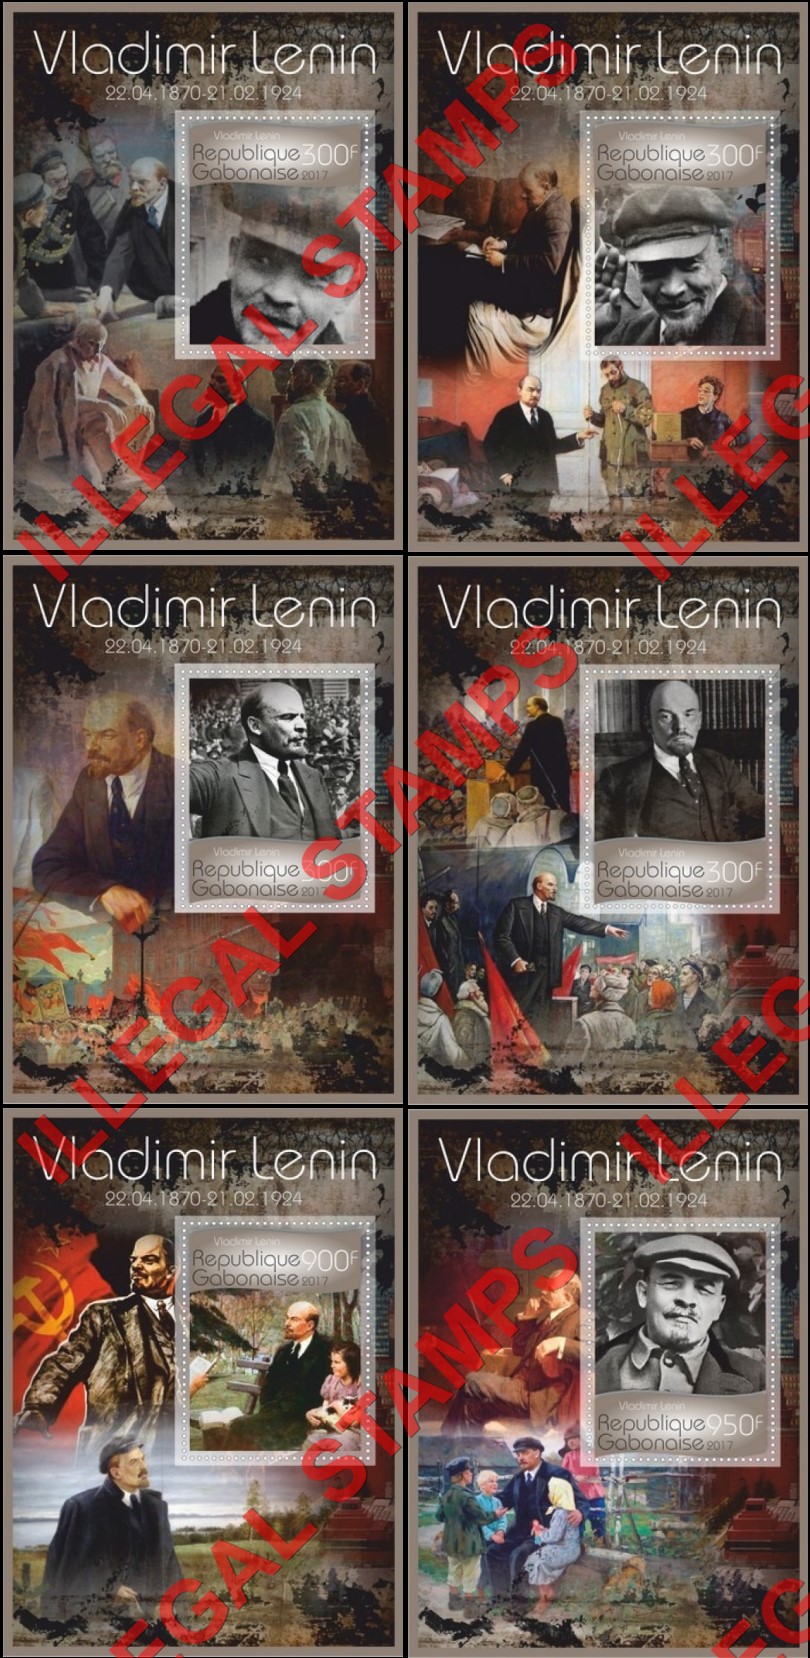 Gabon 2017 Lenin Illegal Stamp Souvenir Sheets of 1